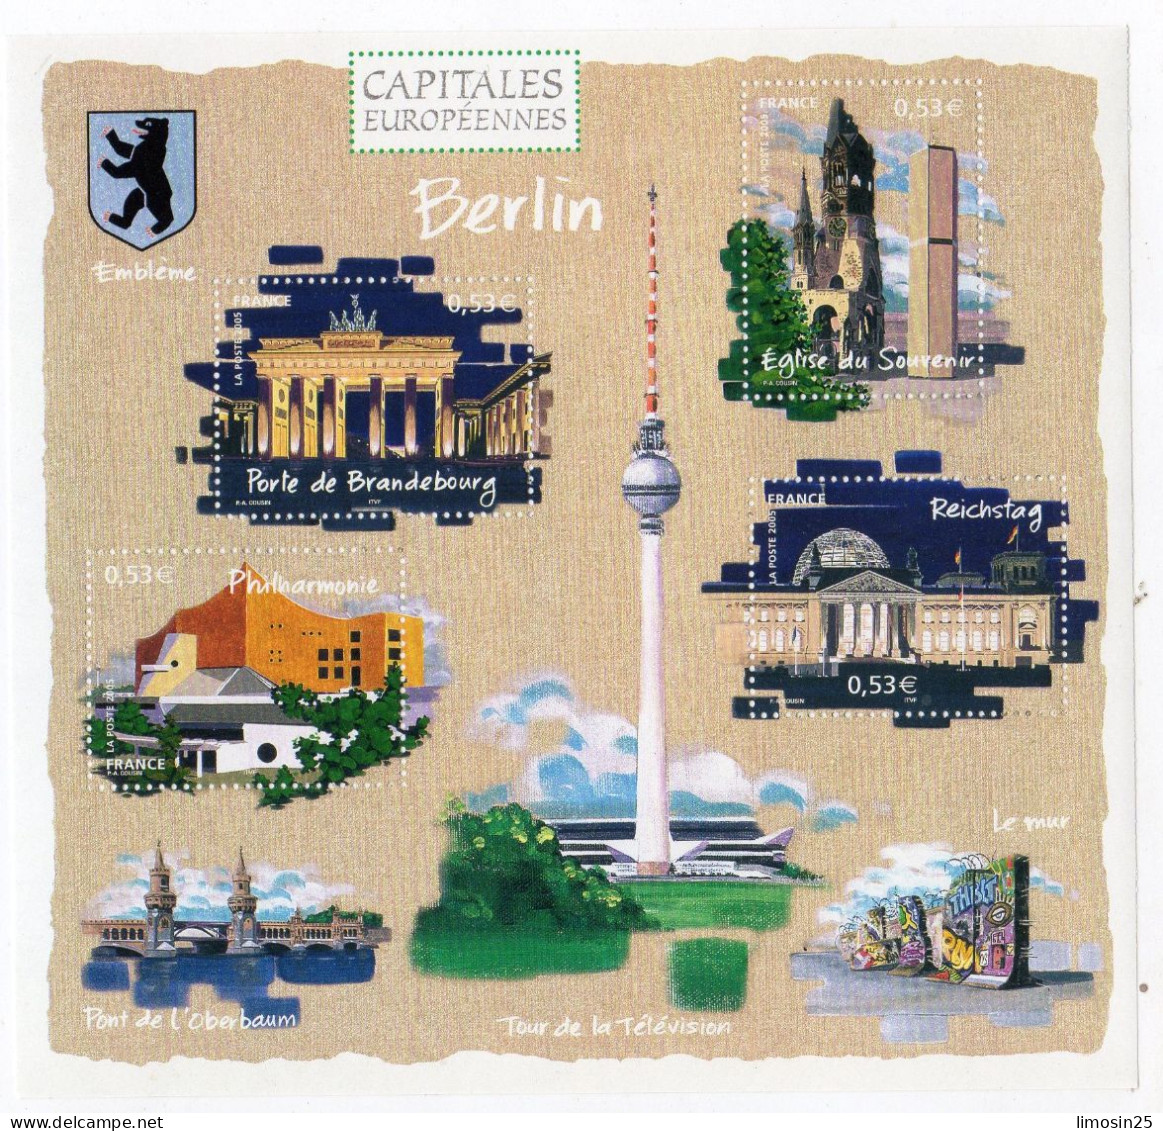 CAPITALES EUROPEENNES - Berlin - 2005 - Nuovi